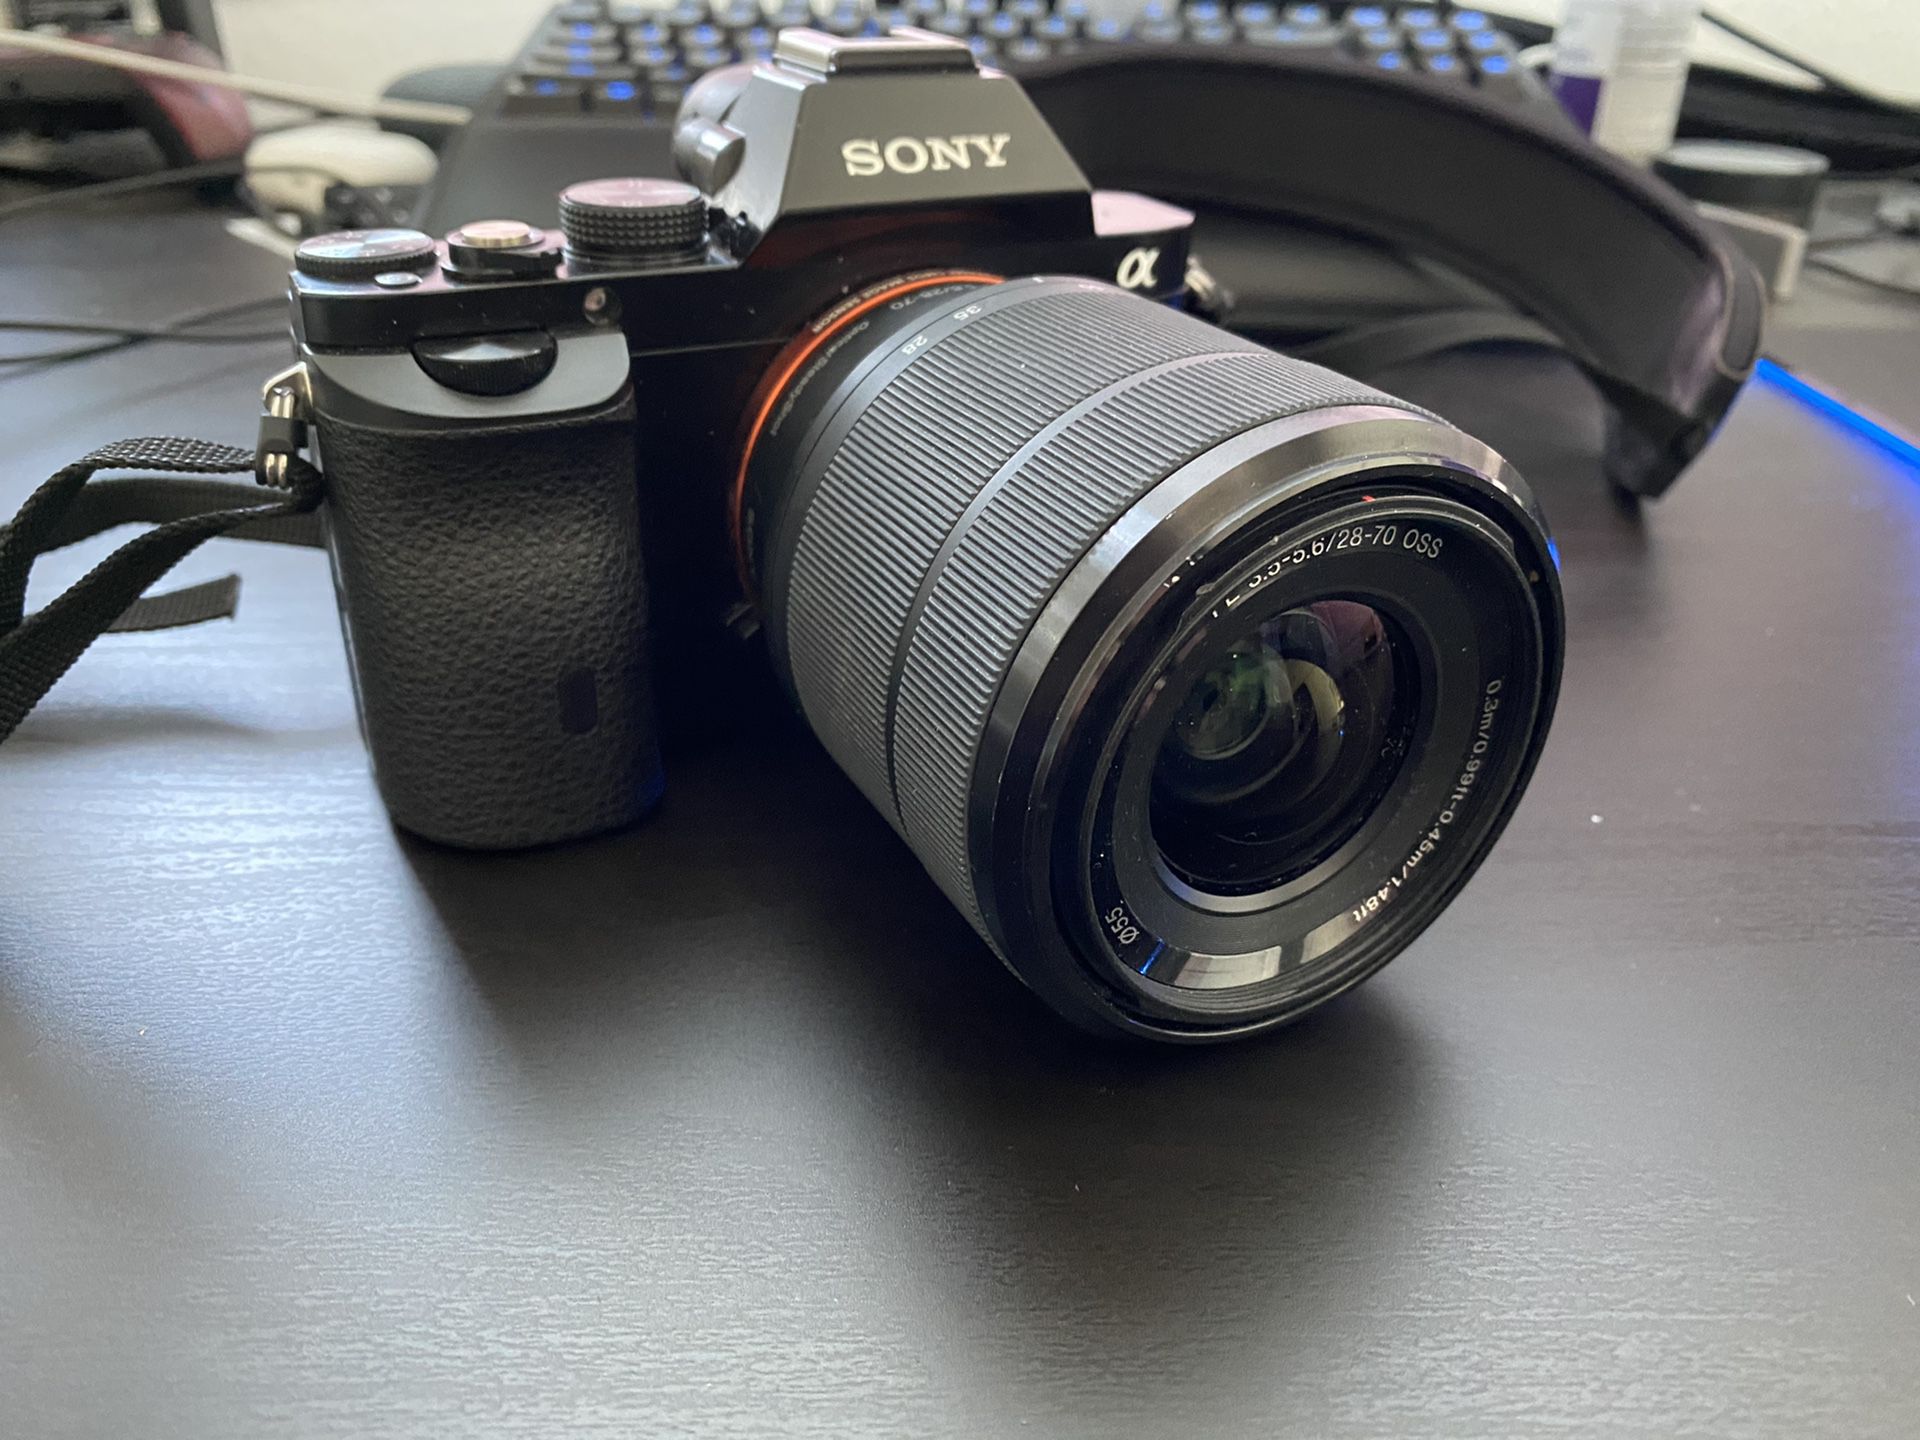 Sony A7 Full-Frame Mirrorless Camera